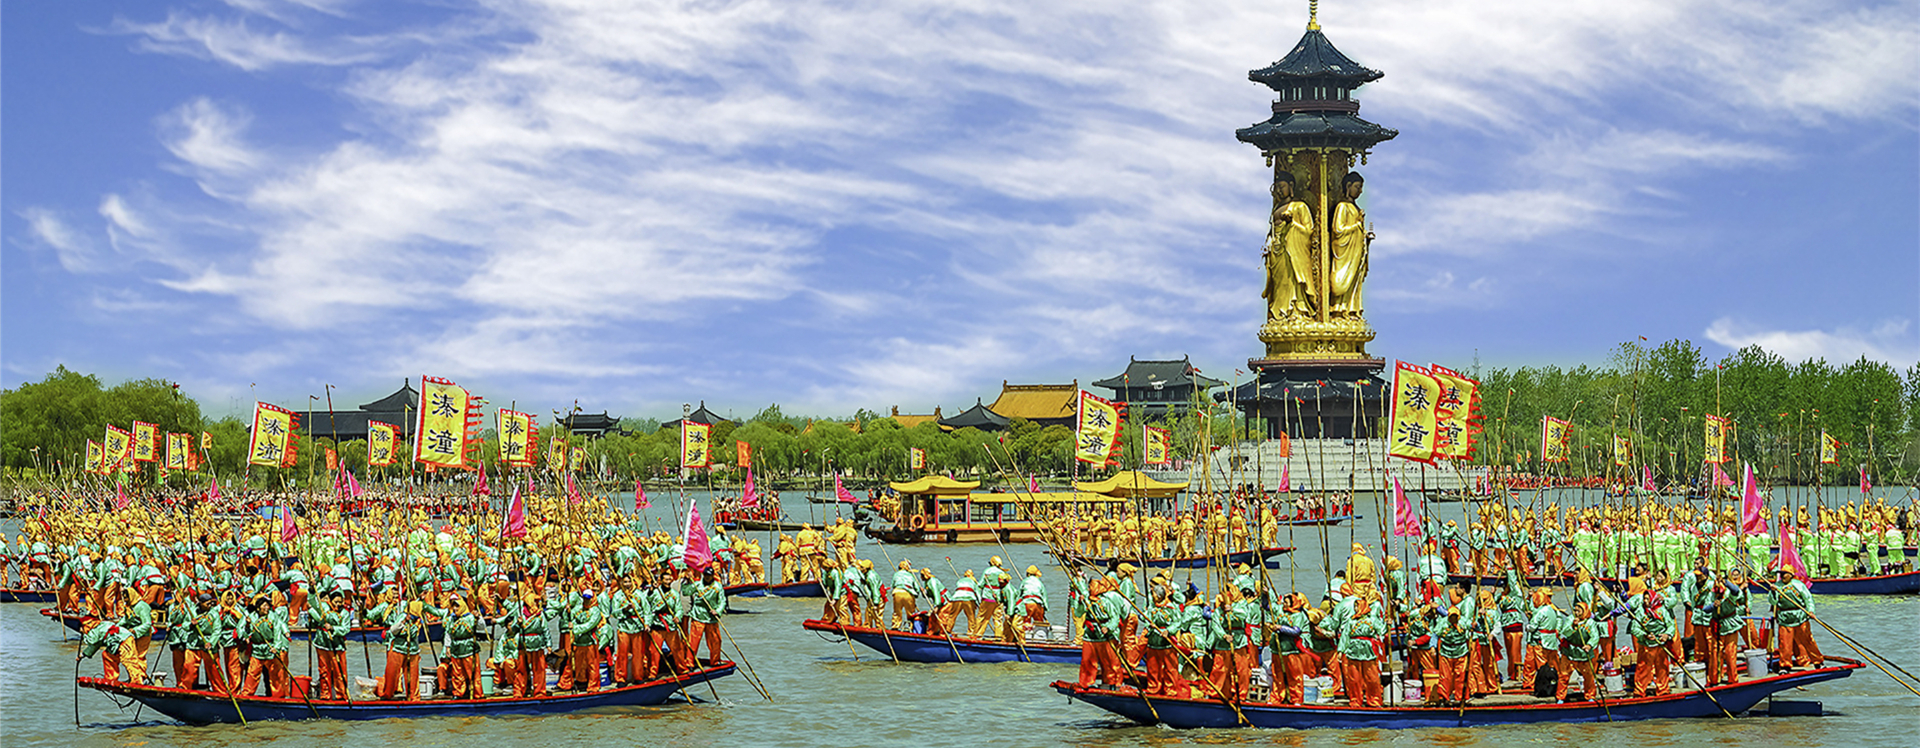 Qintong Boat Festival